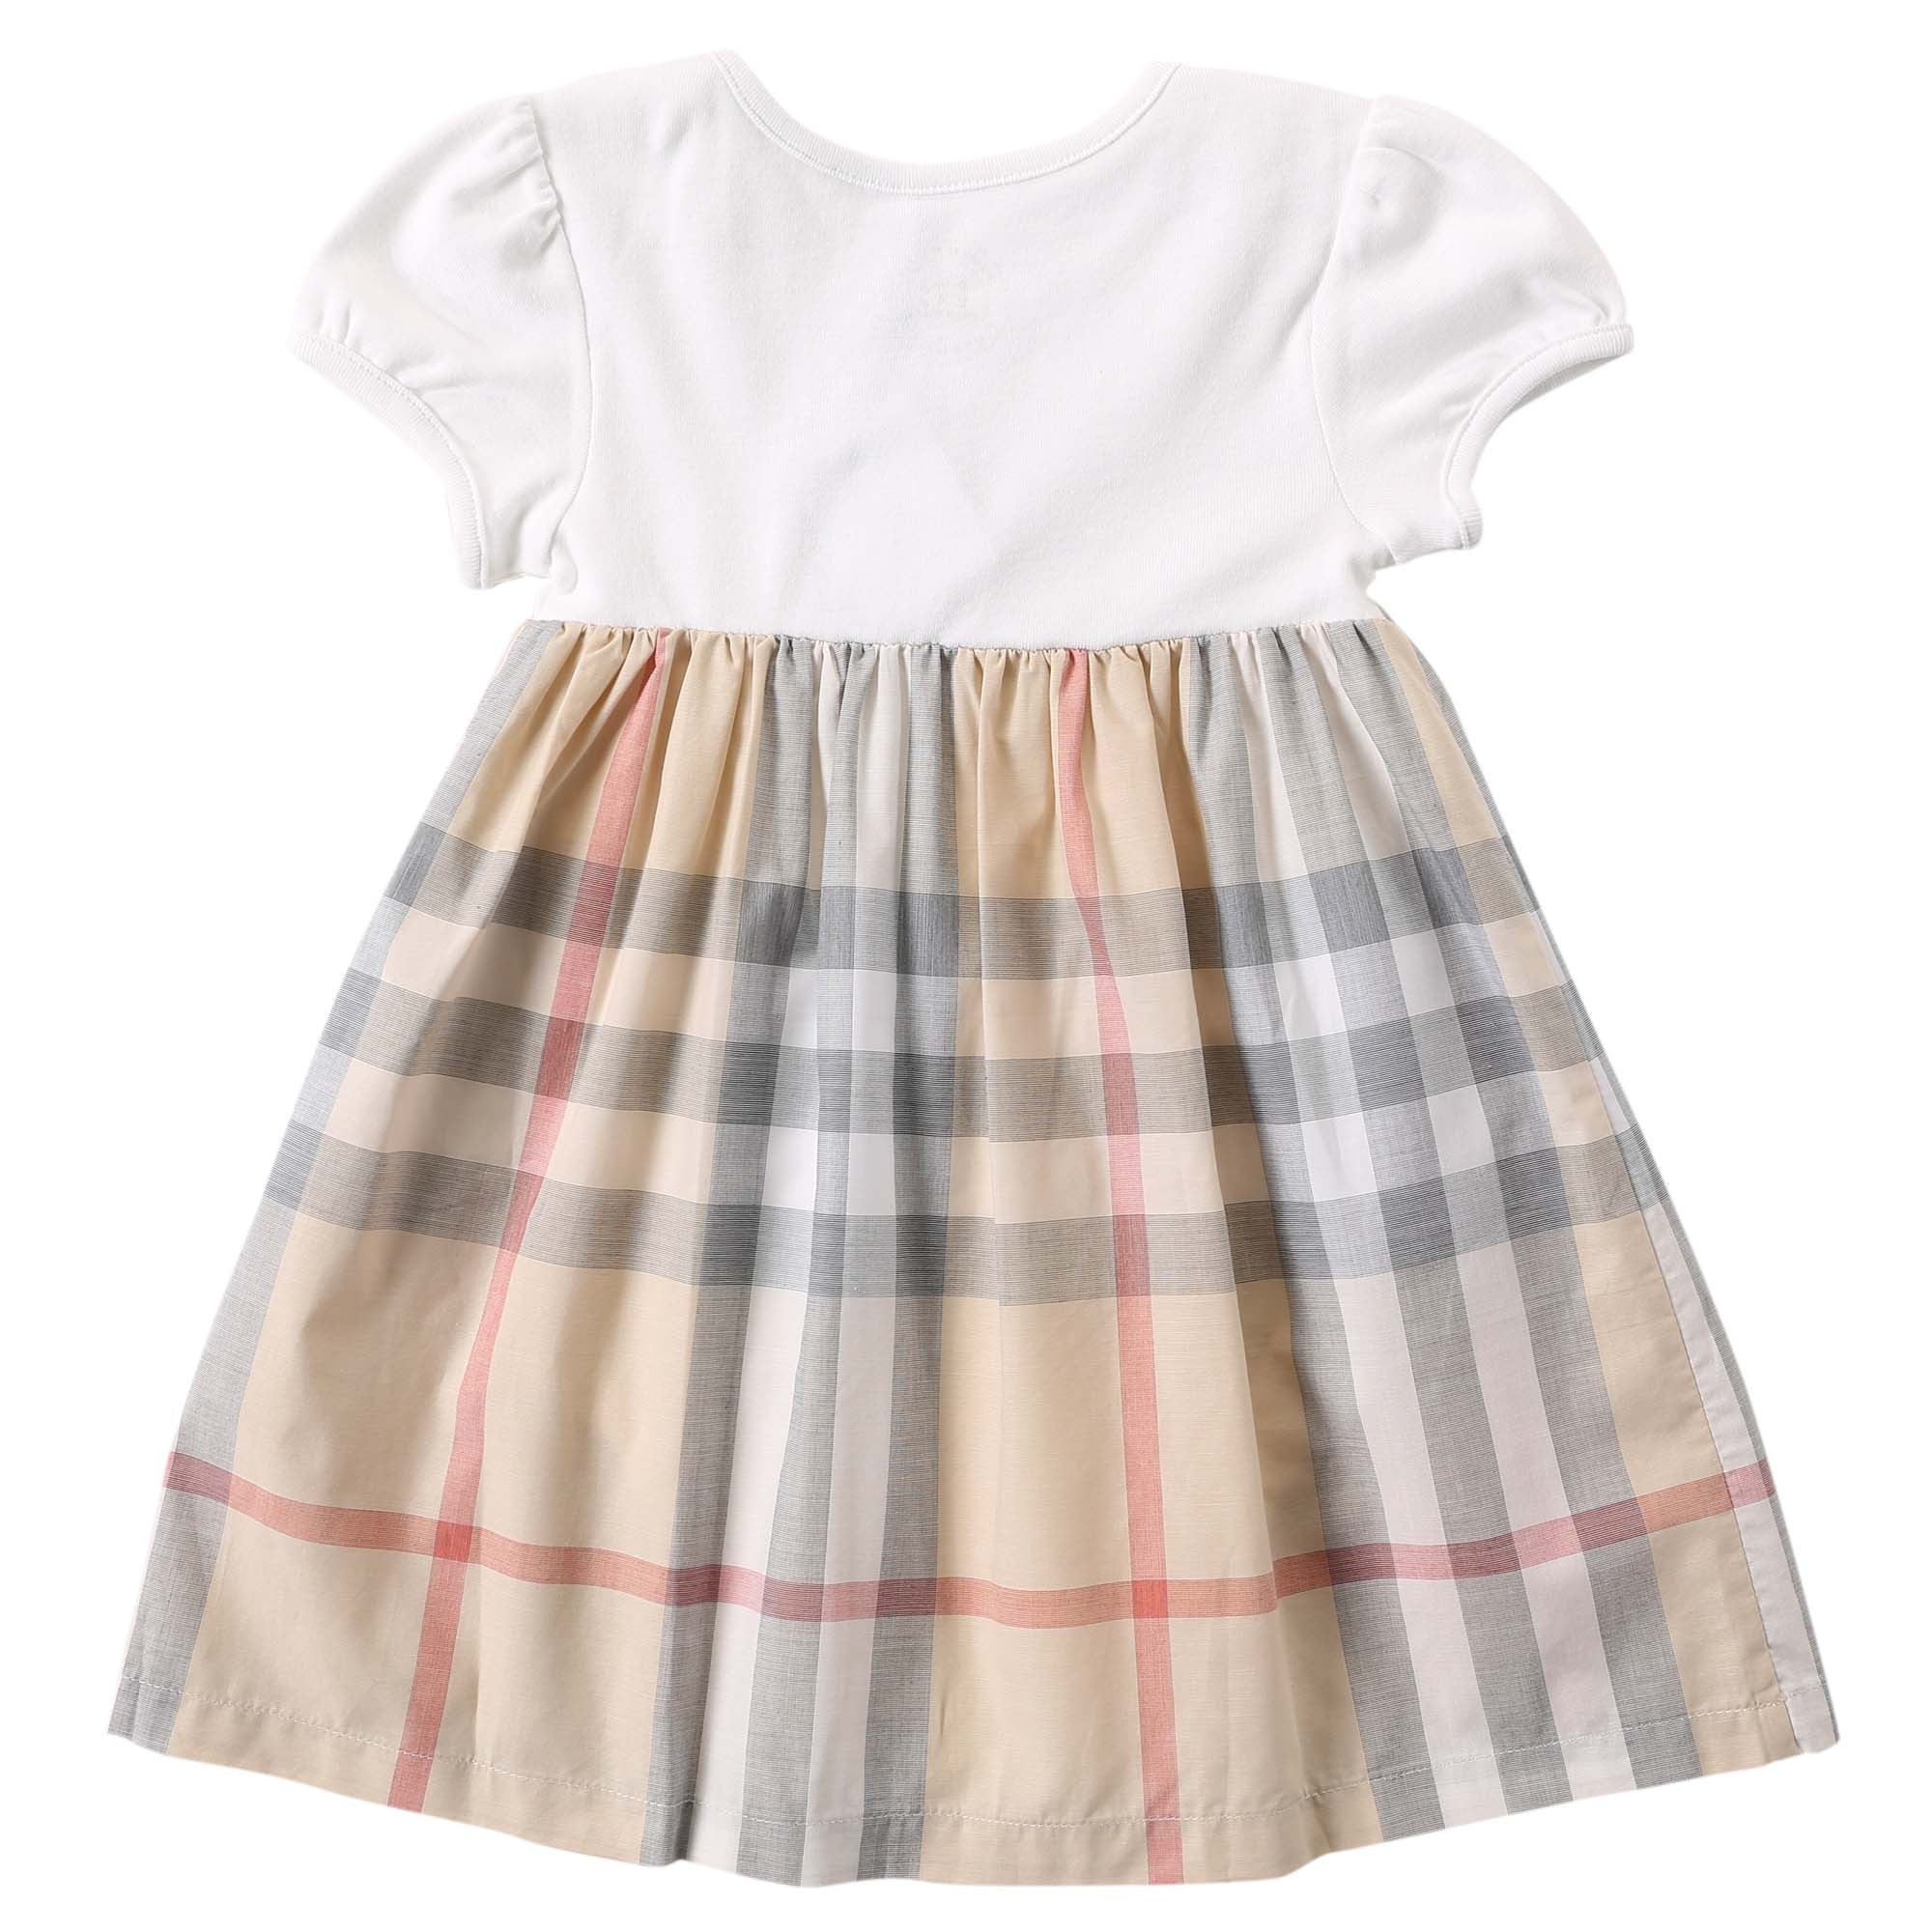 Baby Girls White & Pale Pink Classic Check Dress - CÉMAROSE | Children's Fashion Store - 2